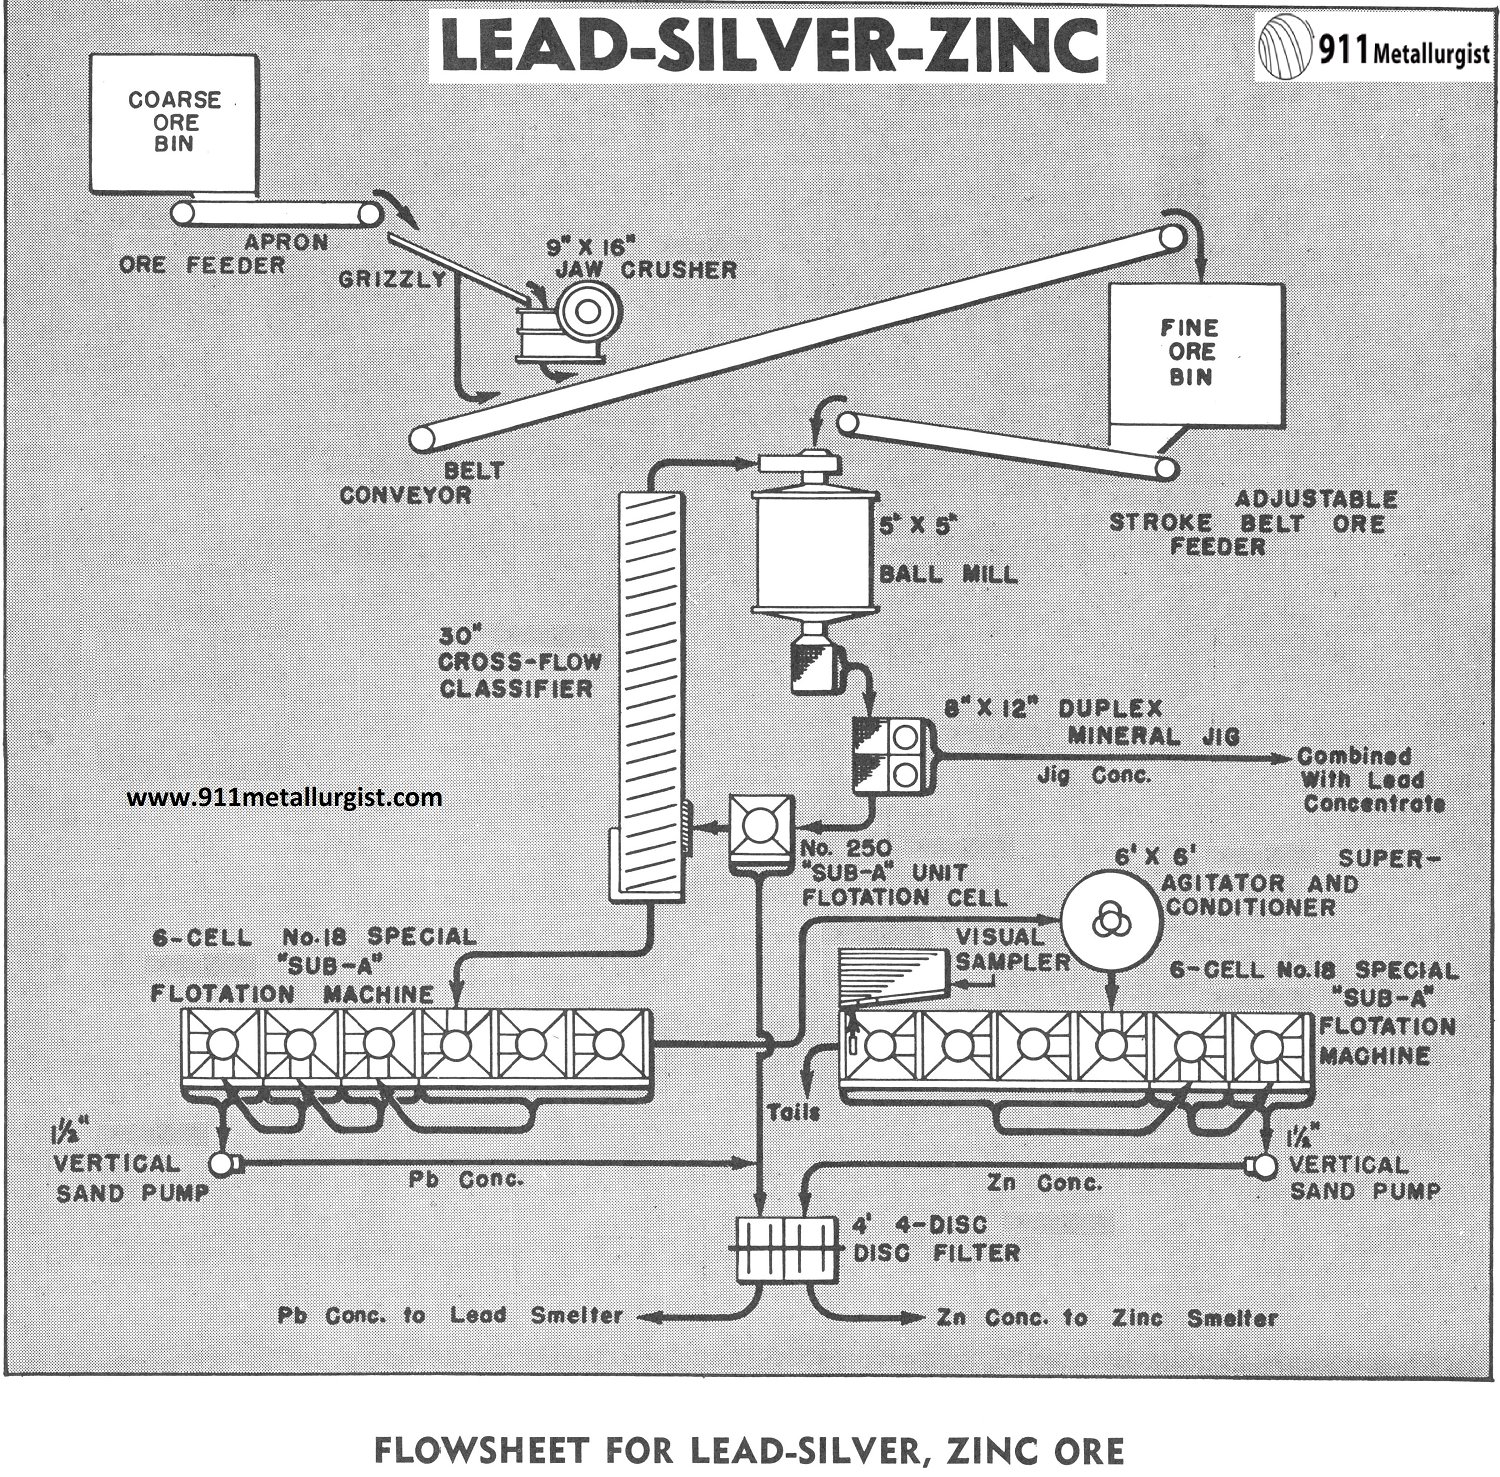 Flowsheet for Lead-Silver, Zinc Ore